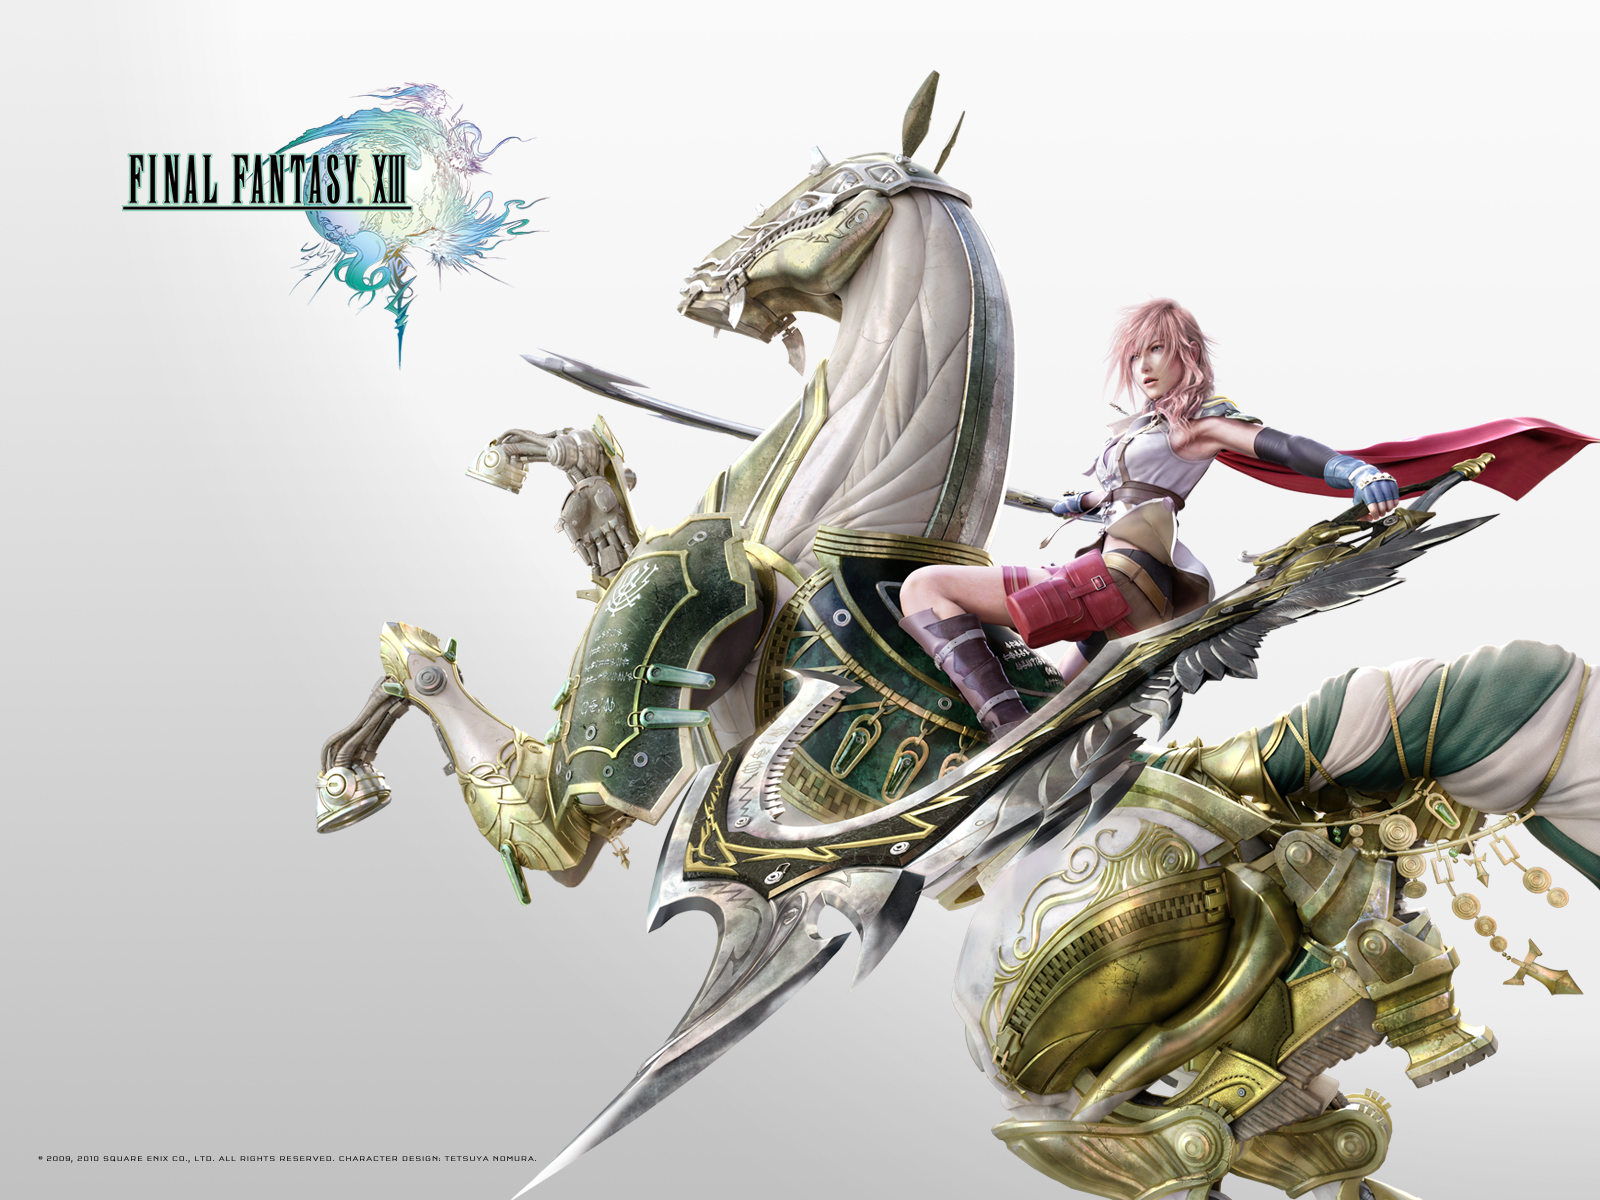 Final Fantasy Xiii Ff13 Wallpaper The Final Fantasy